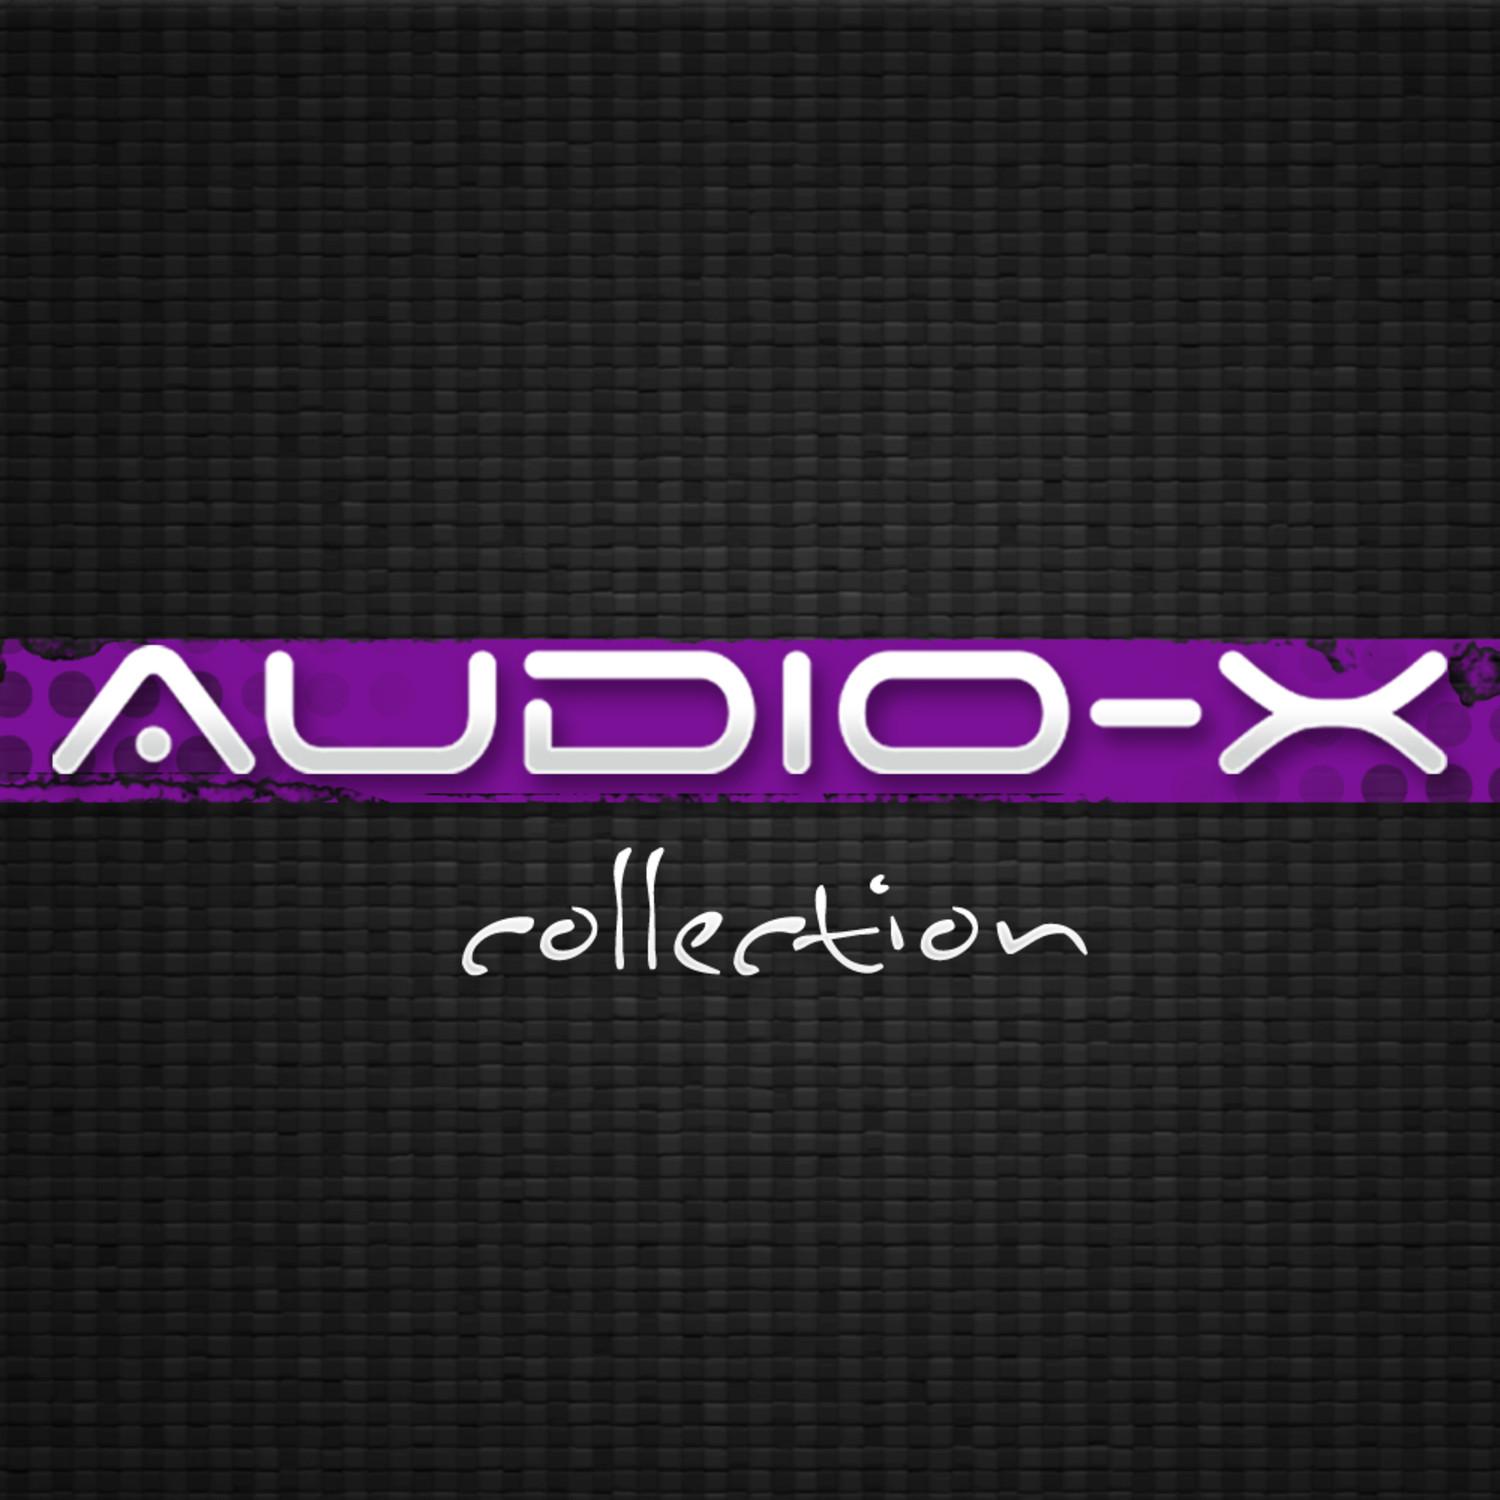 Audio-X Collection